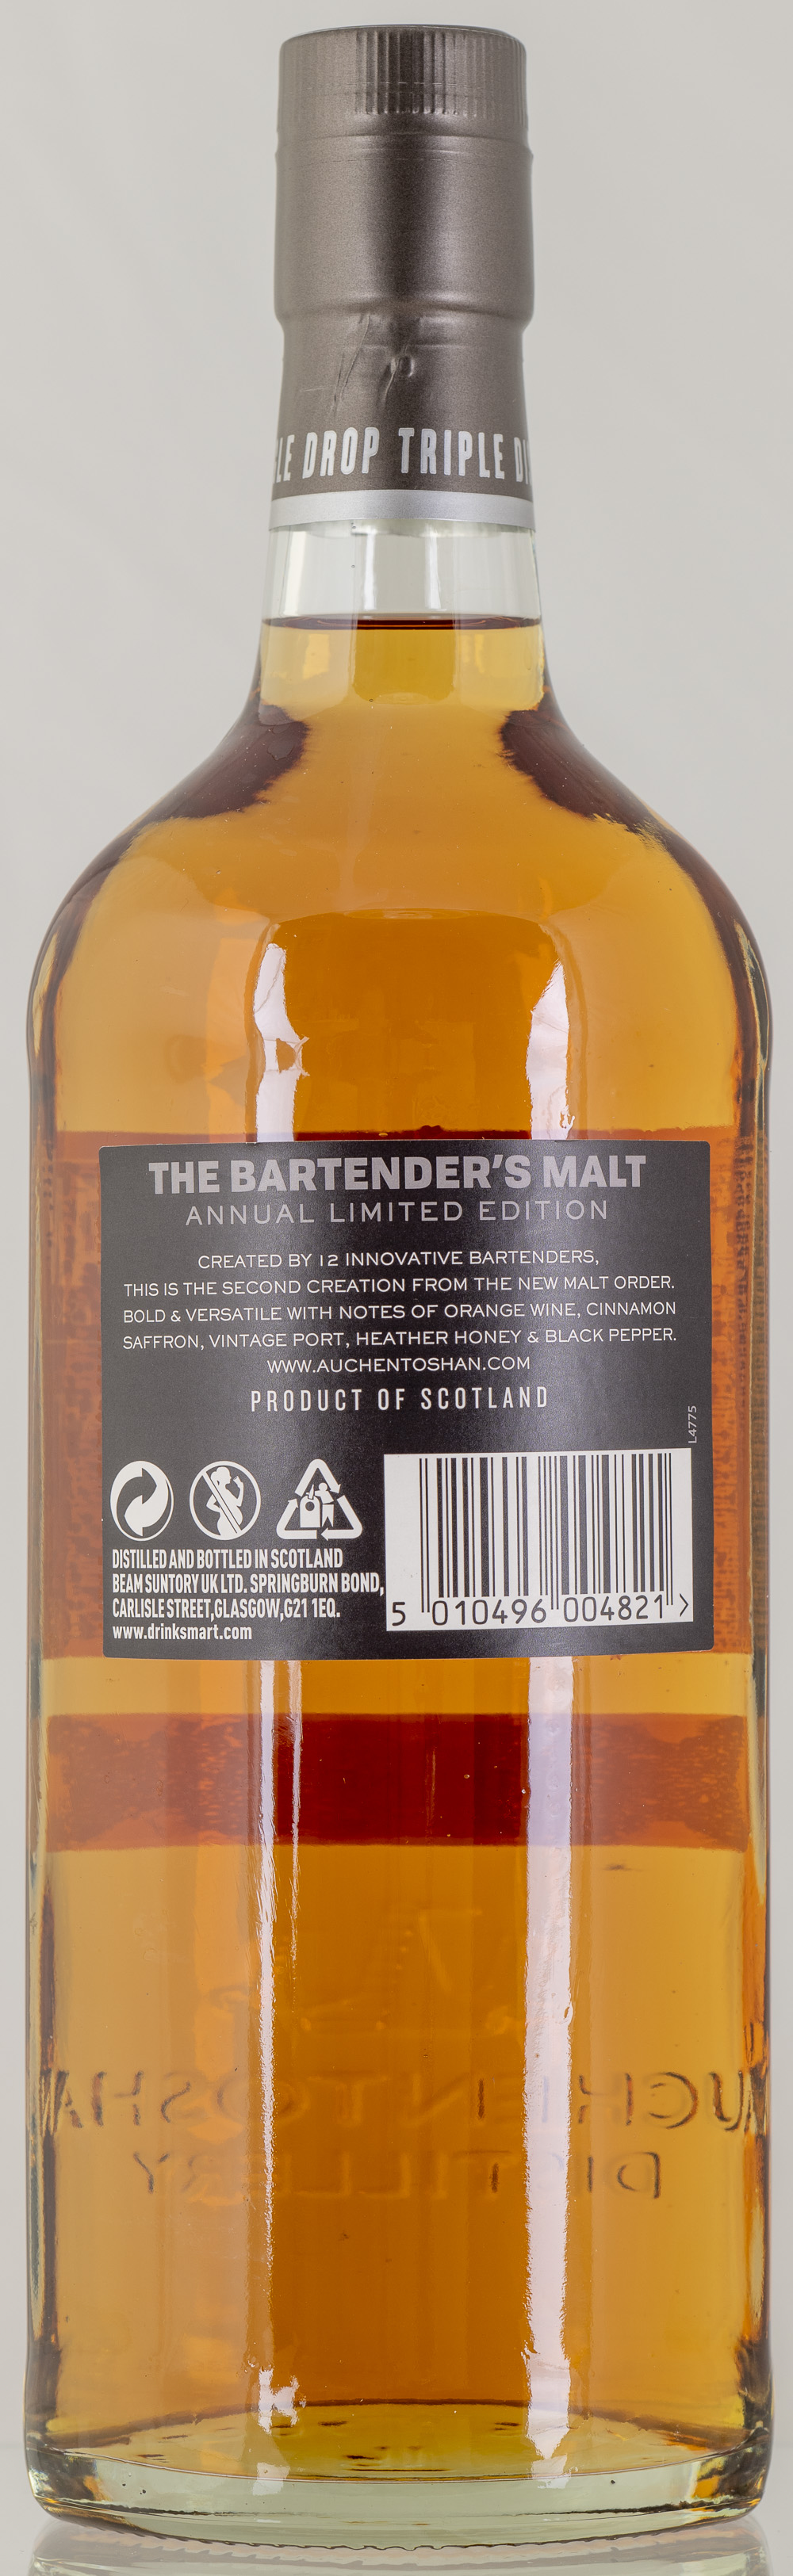 Billede: PHC_2191 - Auchentoshan The Bartenders Malt Annual Limited Edition 02 - bottle back.jpg